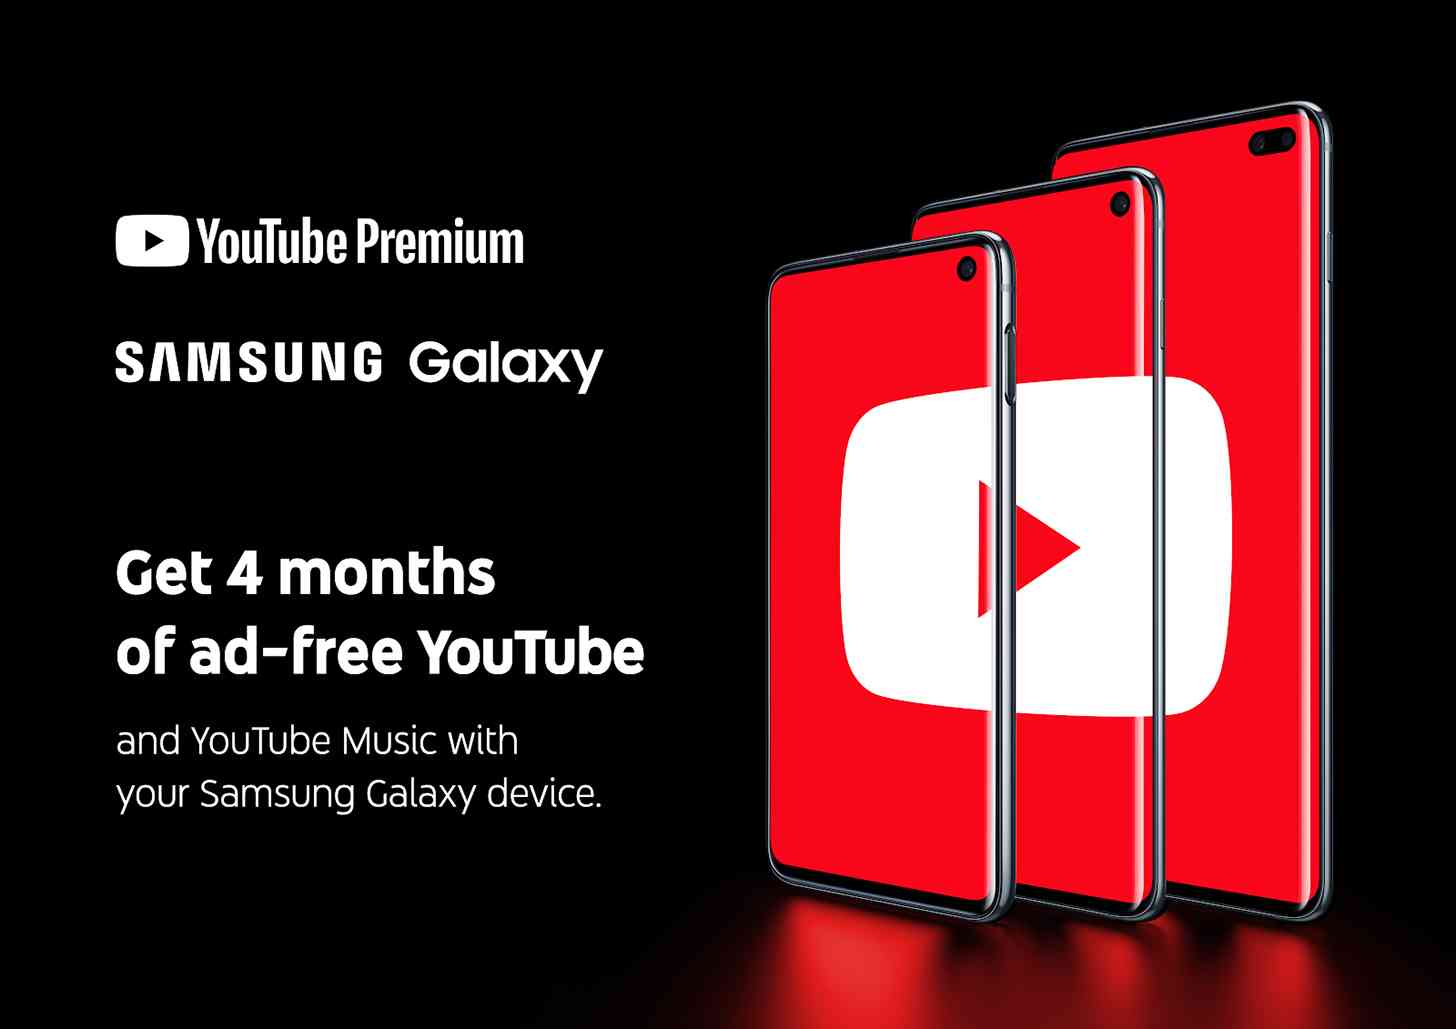 Samsung Galaxy S10 YouTube Premium free